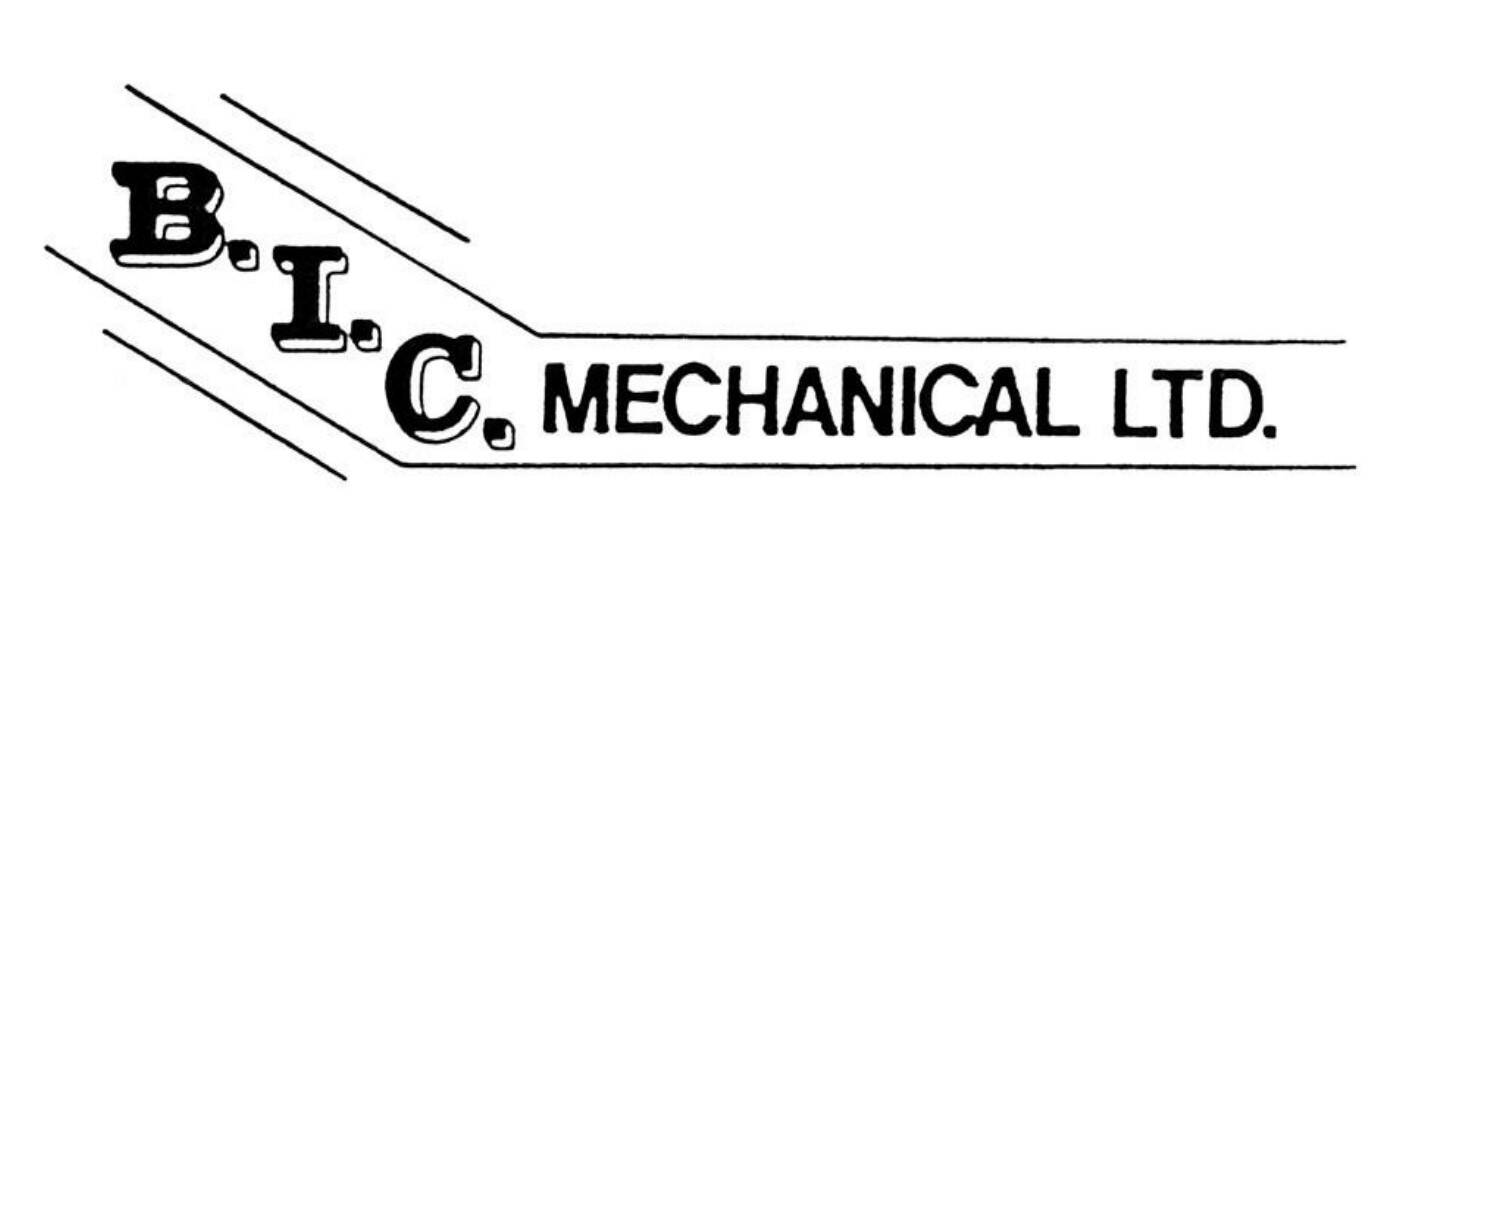 BIC Mechanical